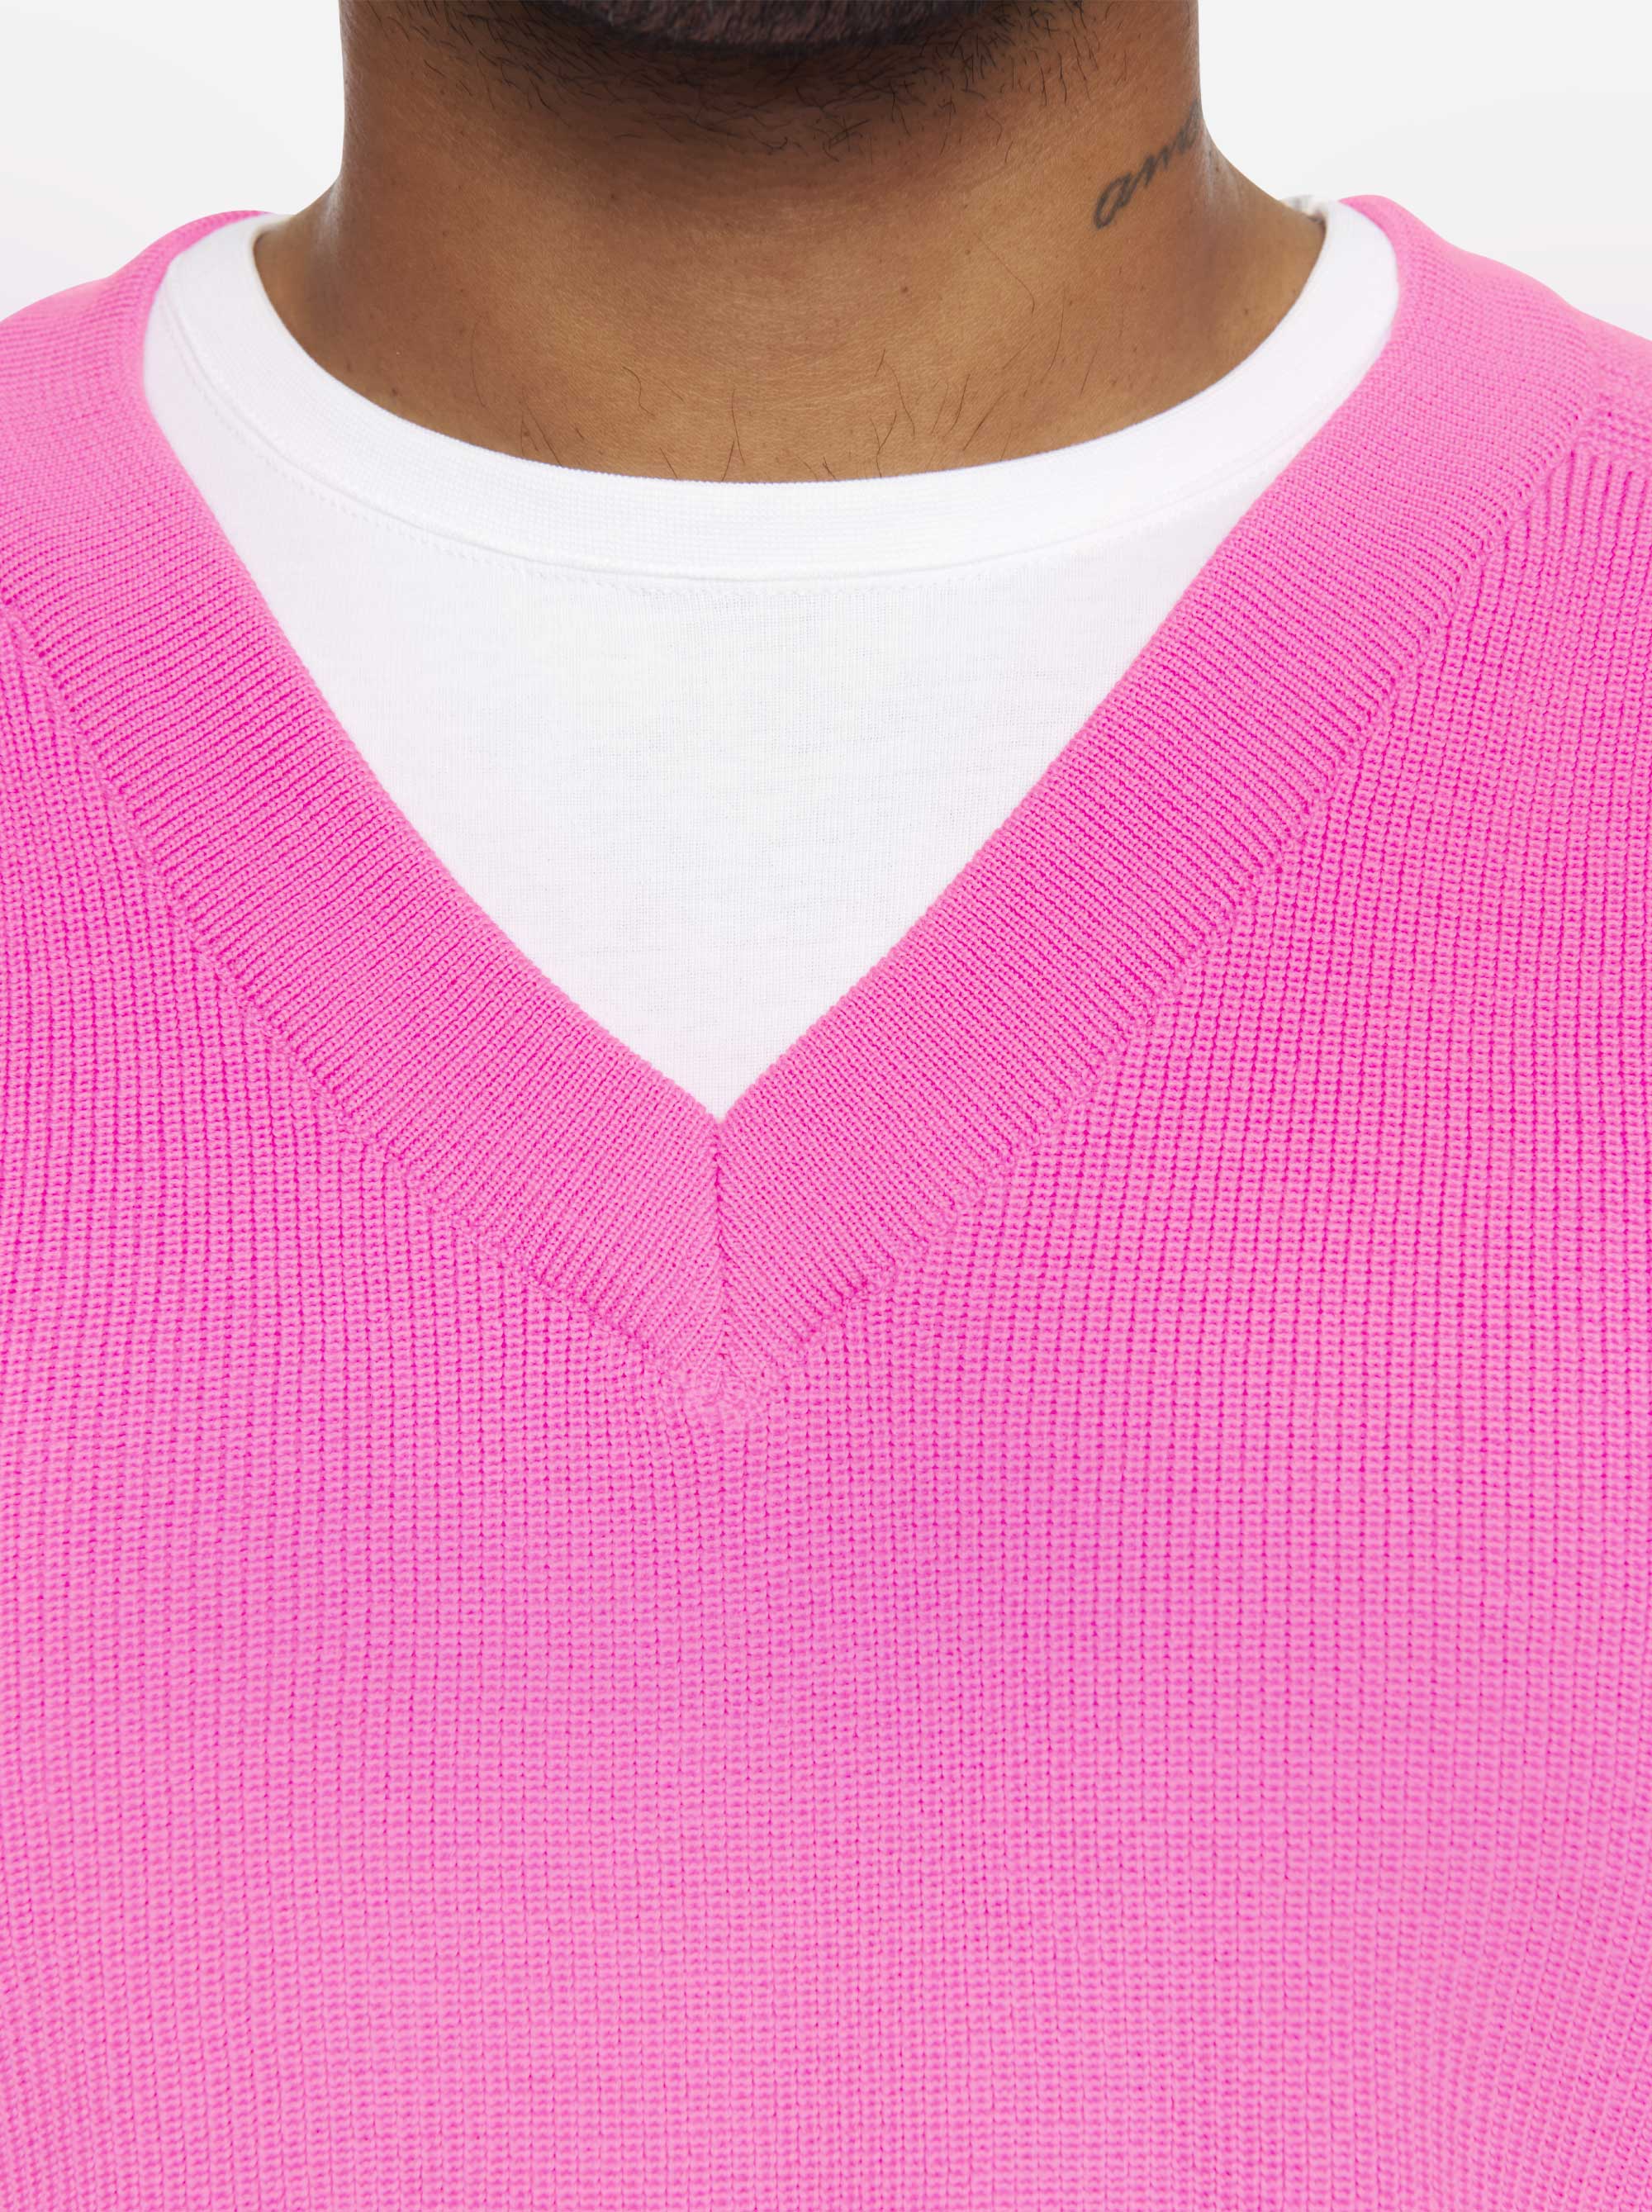 Teym - The Merino Sweater - V-Neck - Men - Bright Pink - 6